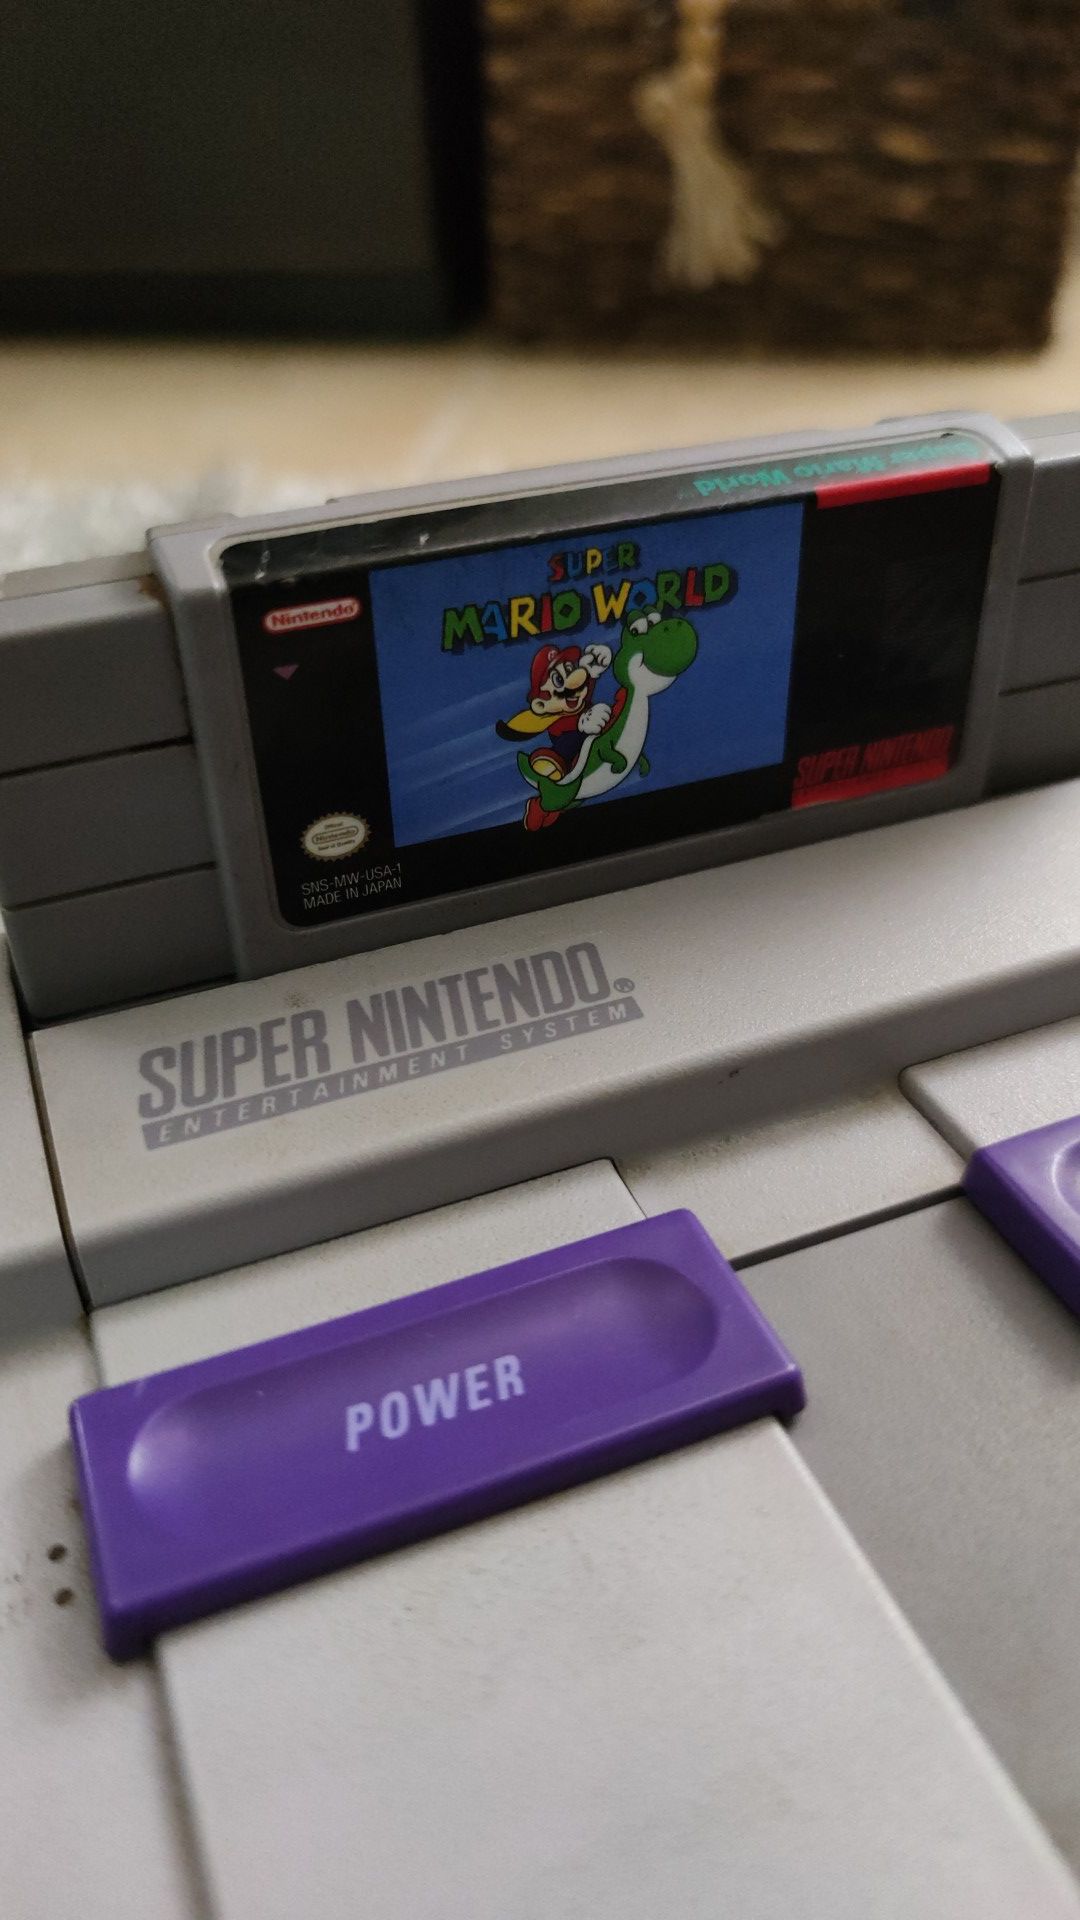 Super Nintendo + 2 controllers + Super Mario + 3 games